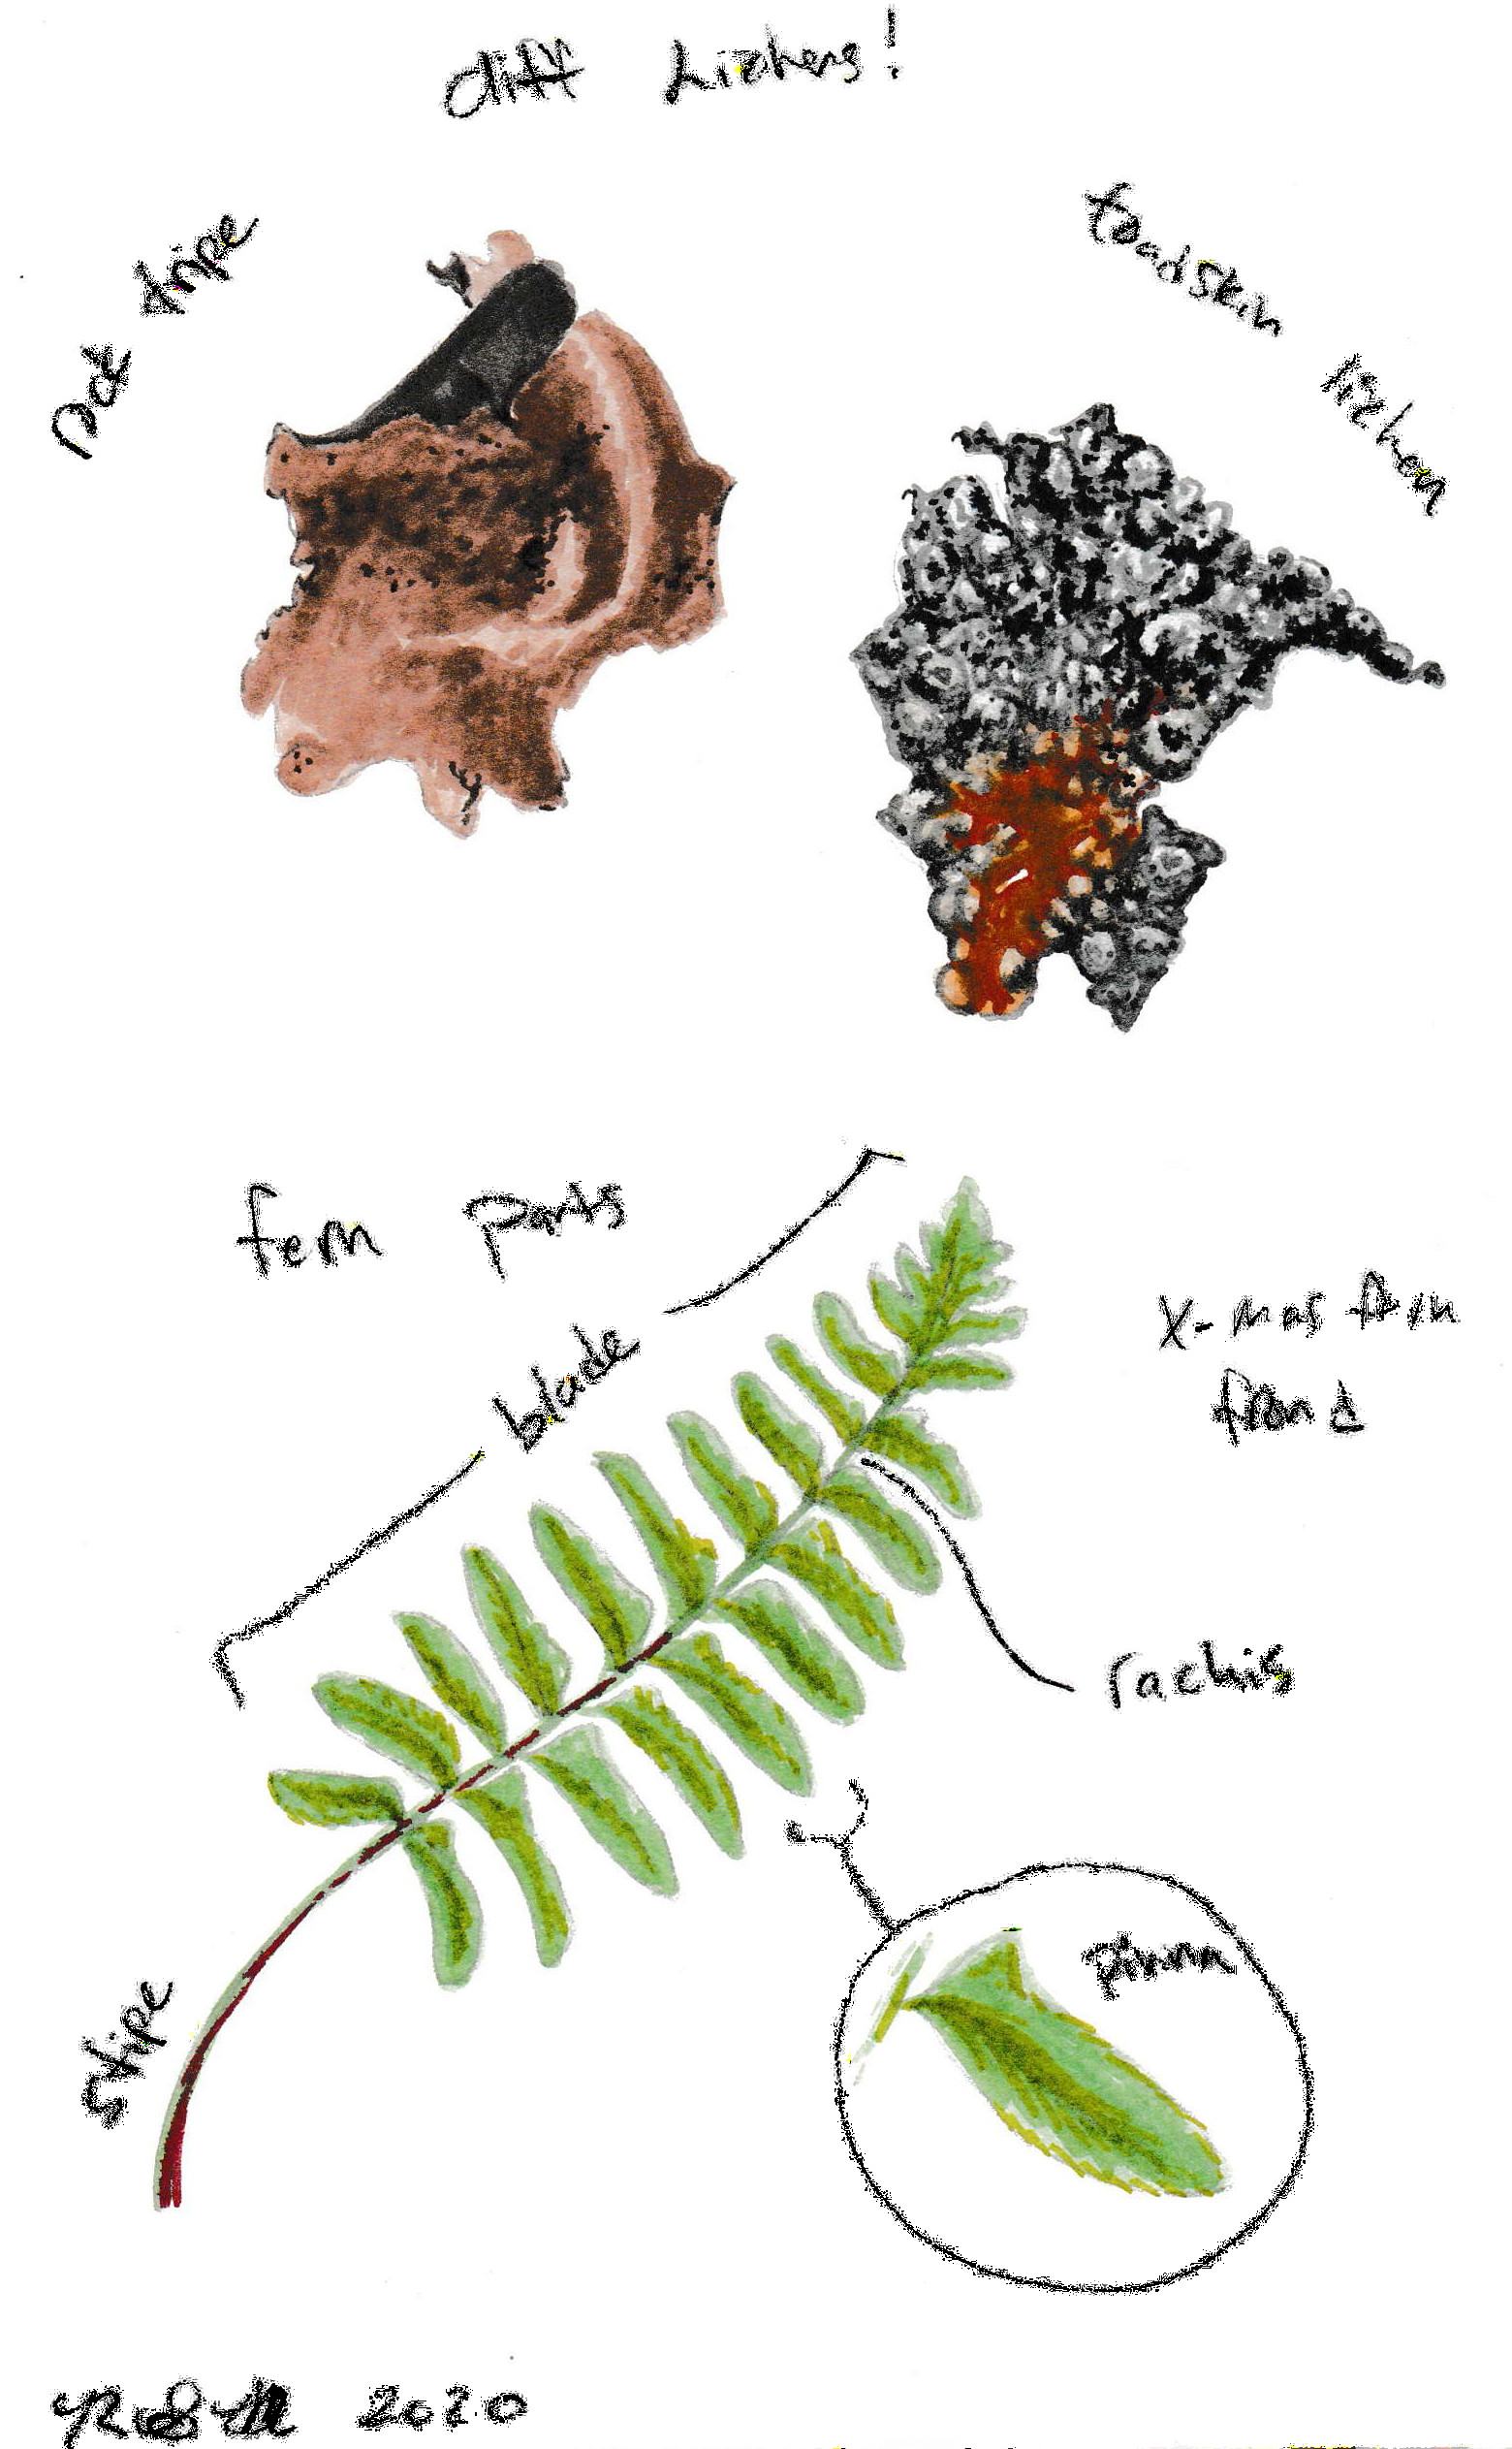 Example nature journal page showing smooth rock tripe lichen, toadskin lichen, and fern anatomy